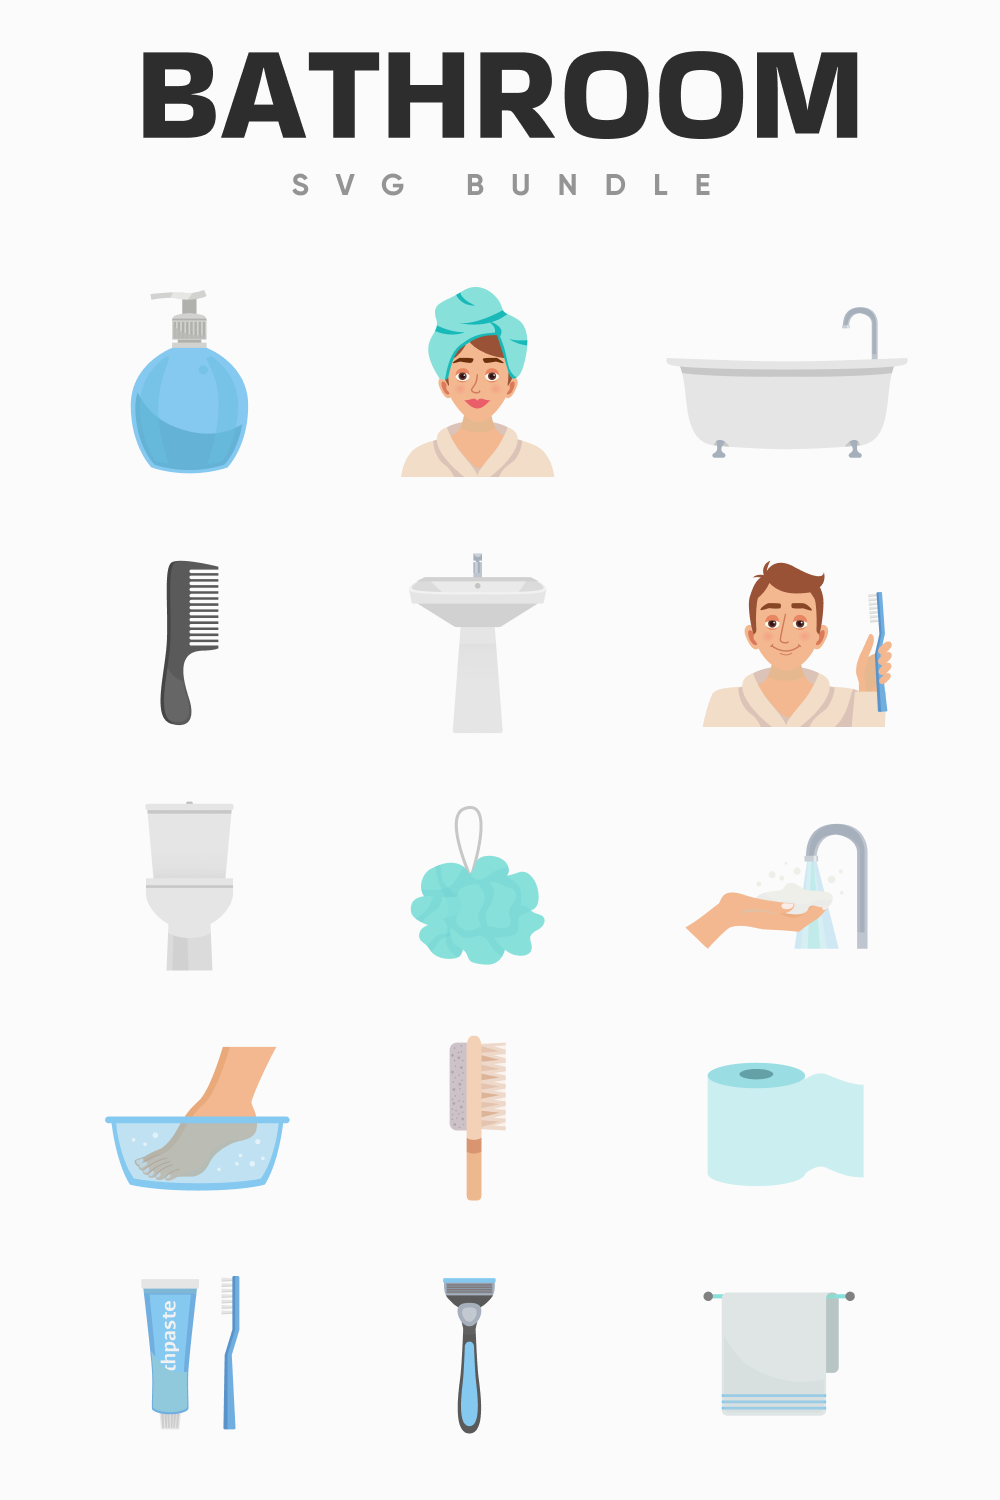 Bathroom SVG bundle.